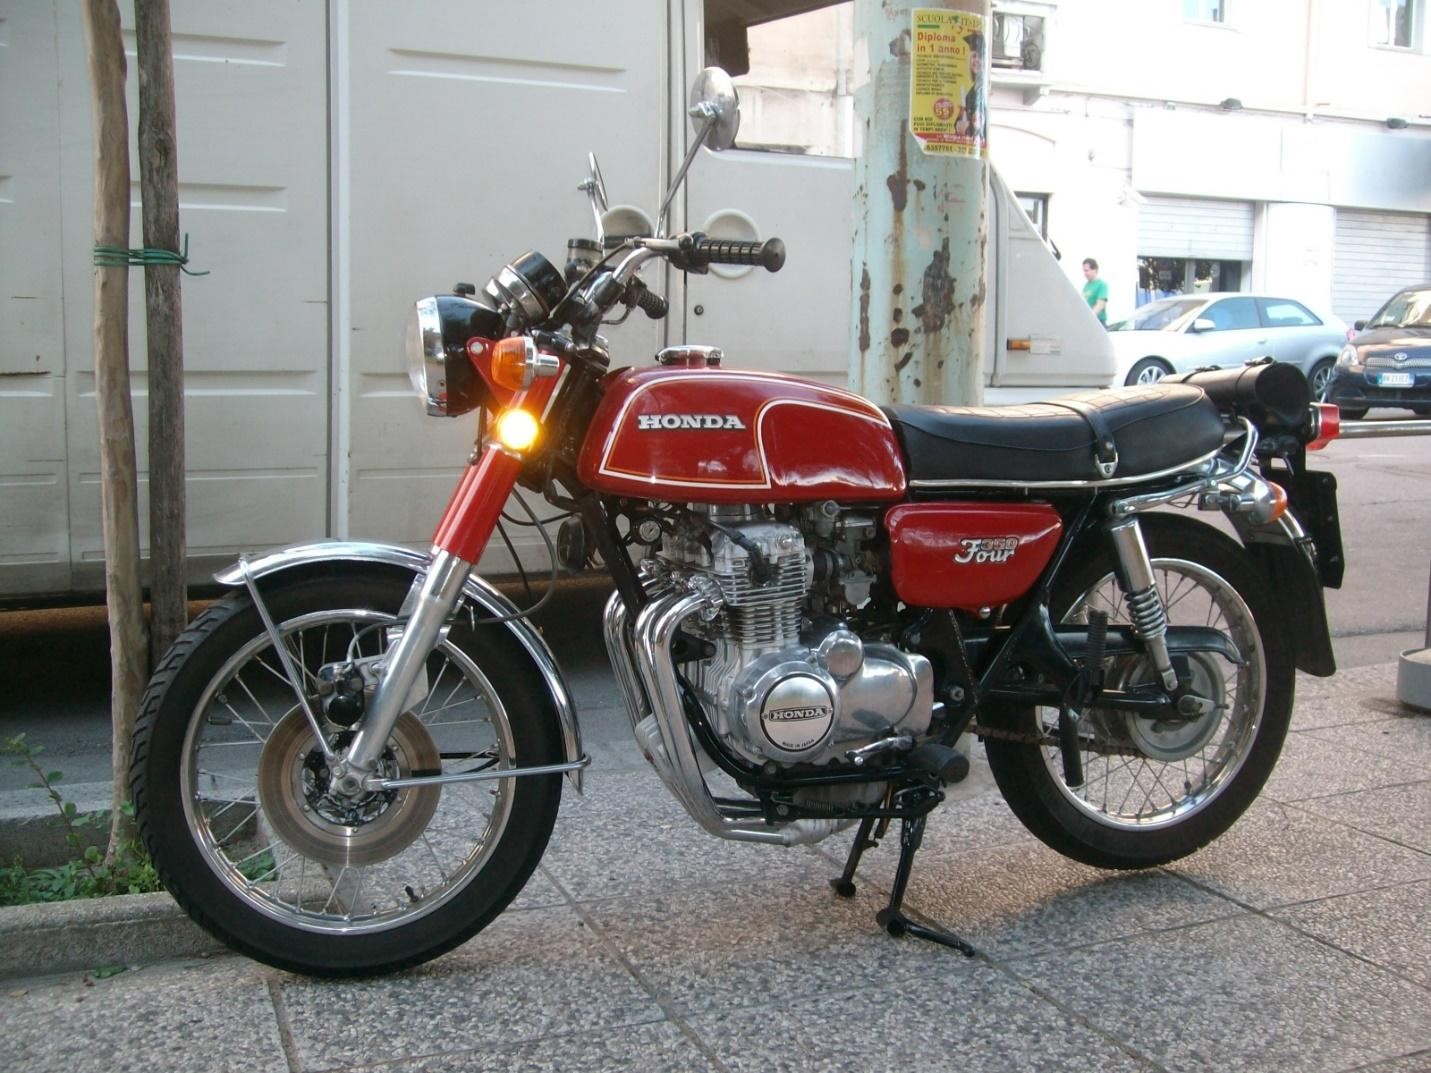 1973 Honda CB350 Four motorcycle.